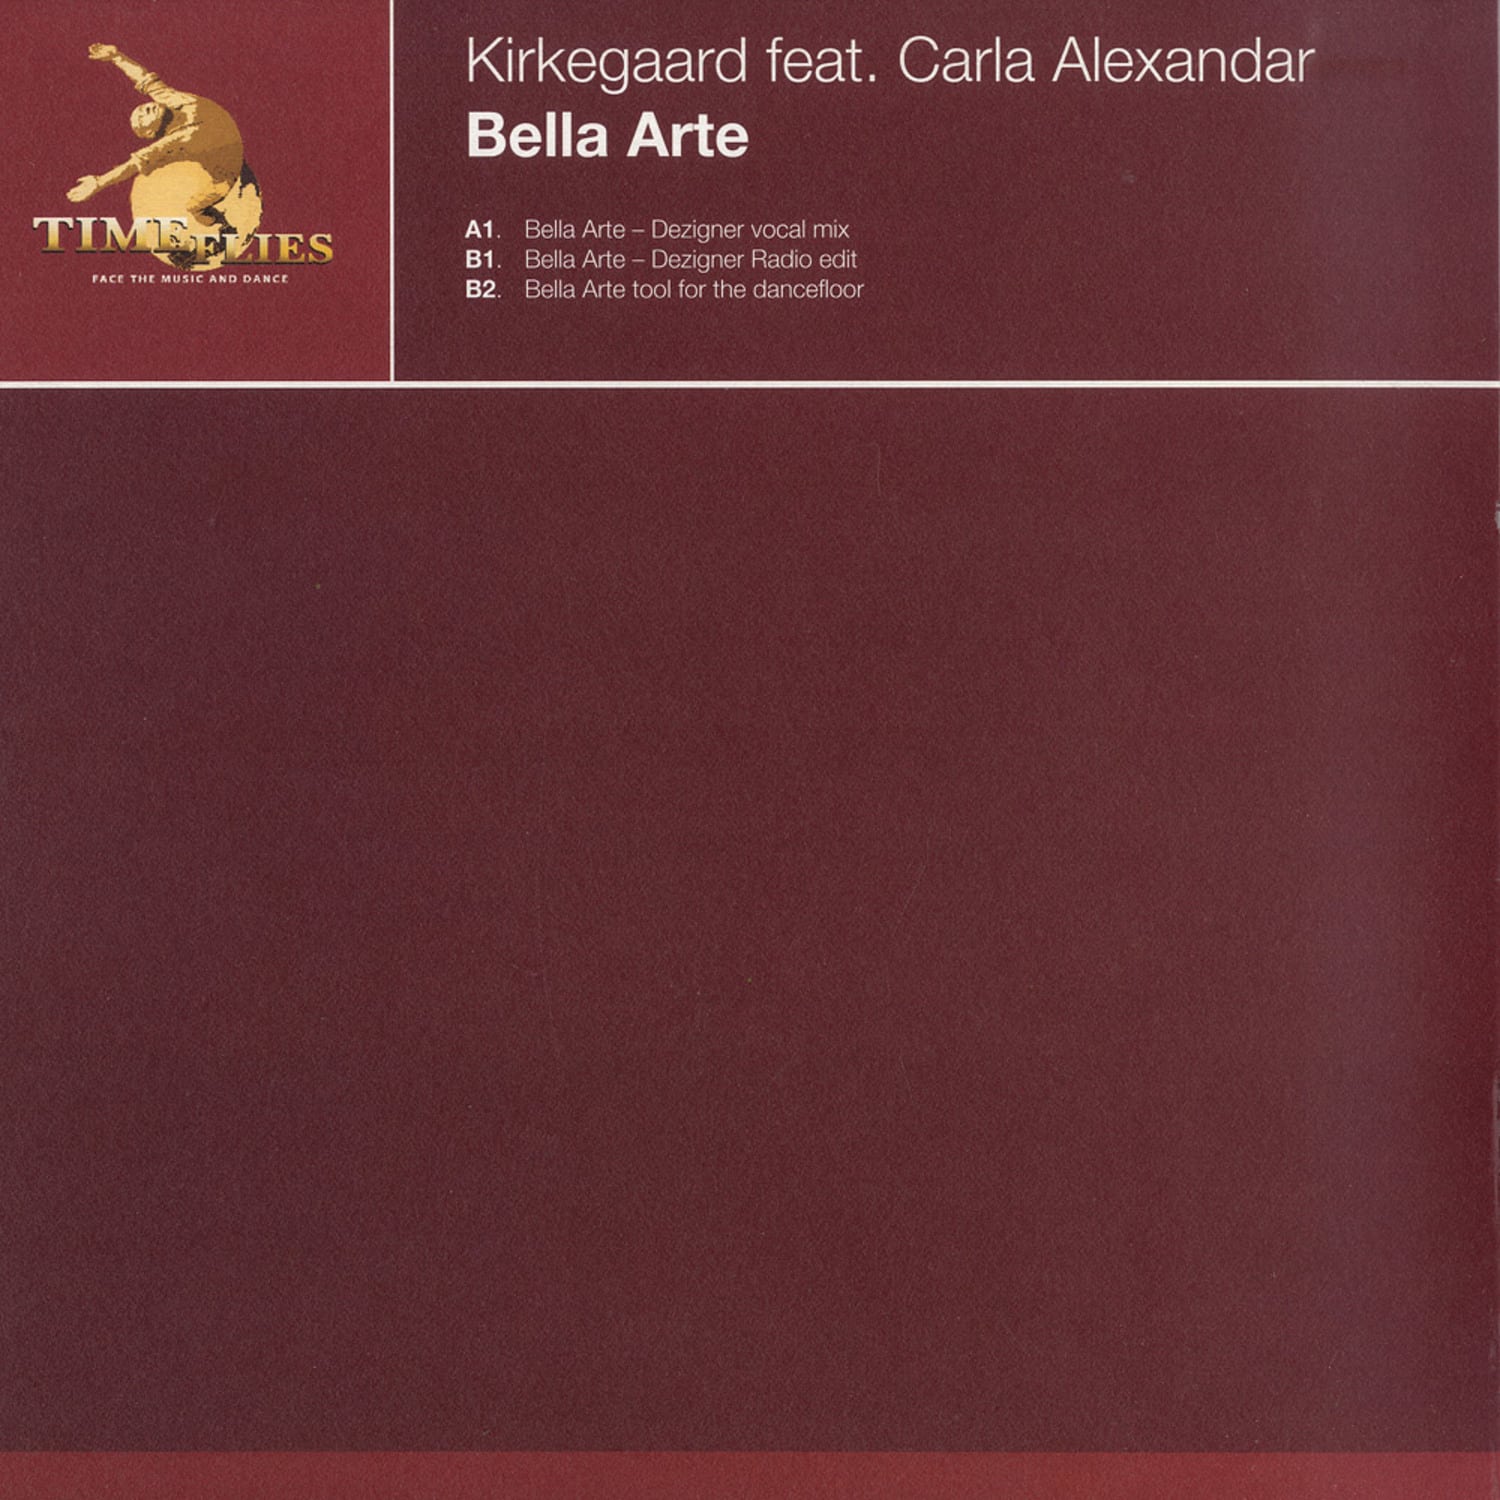 Kirkegaard feat Carla Alexandar - BELLA ARTE